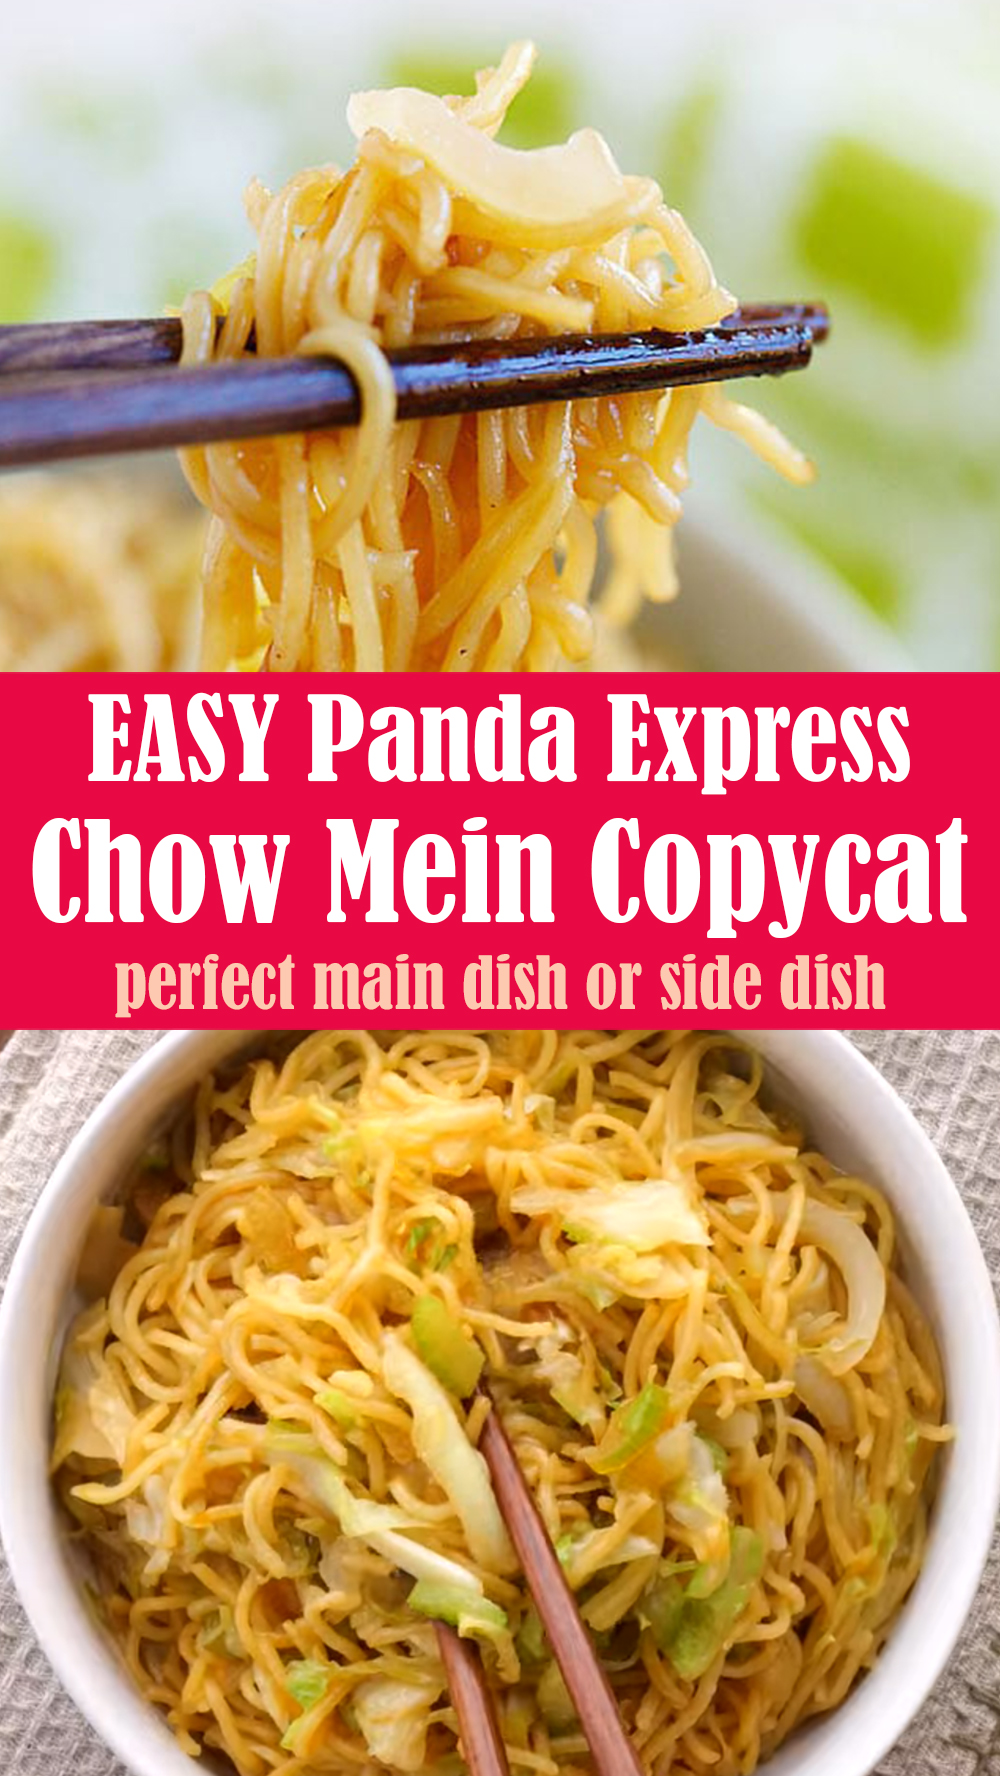 EASY Panda Express Chow Mein Copycat Recipe 2